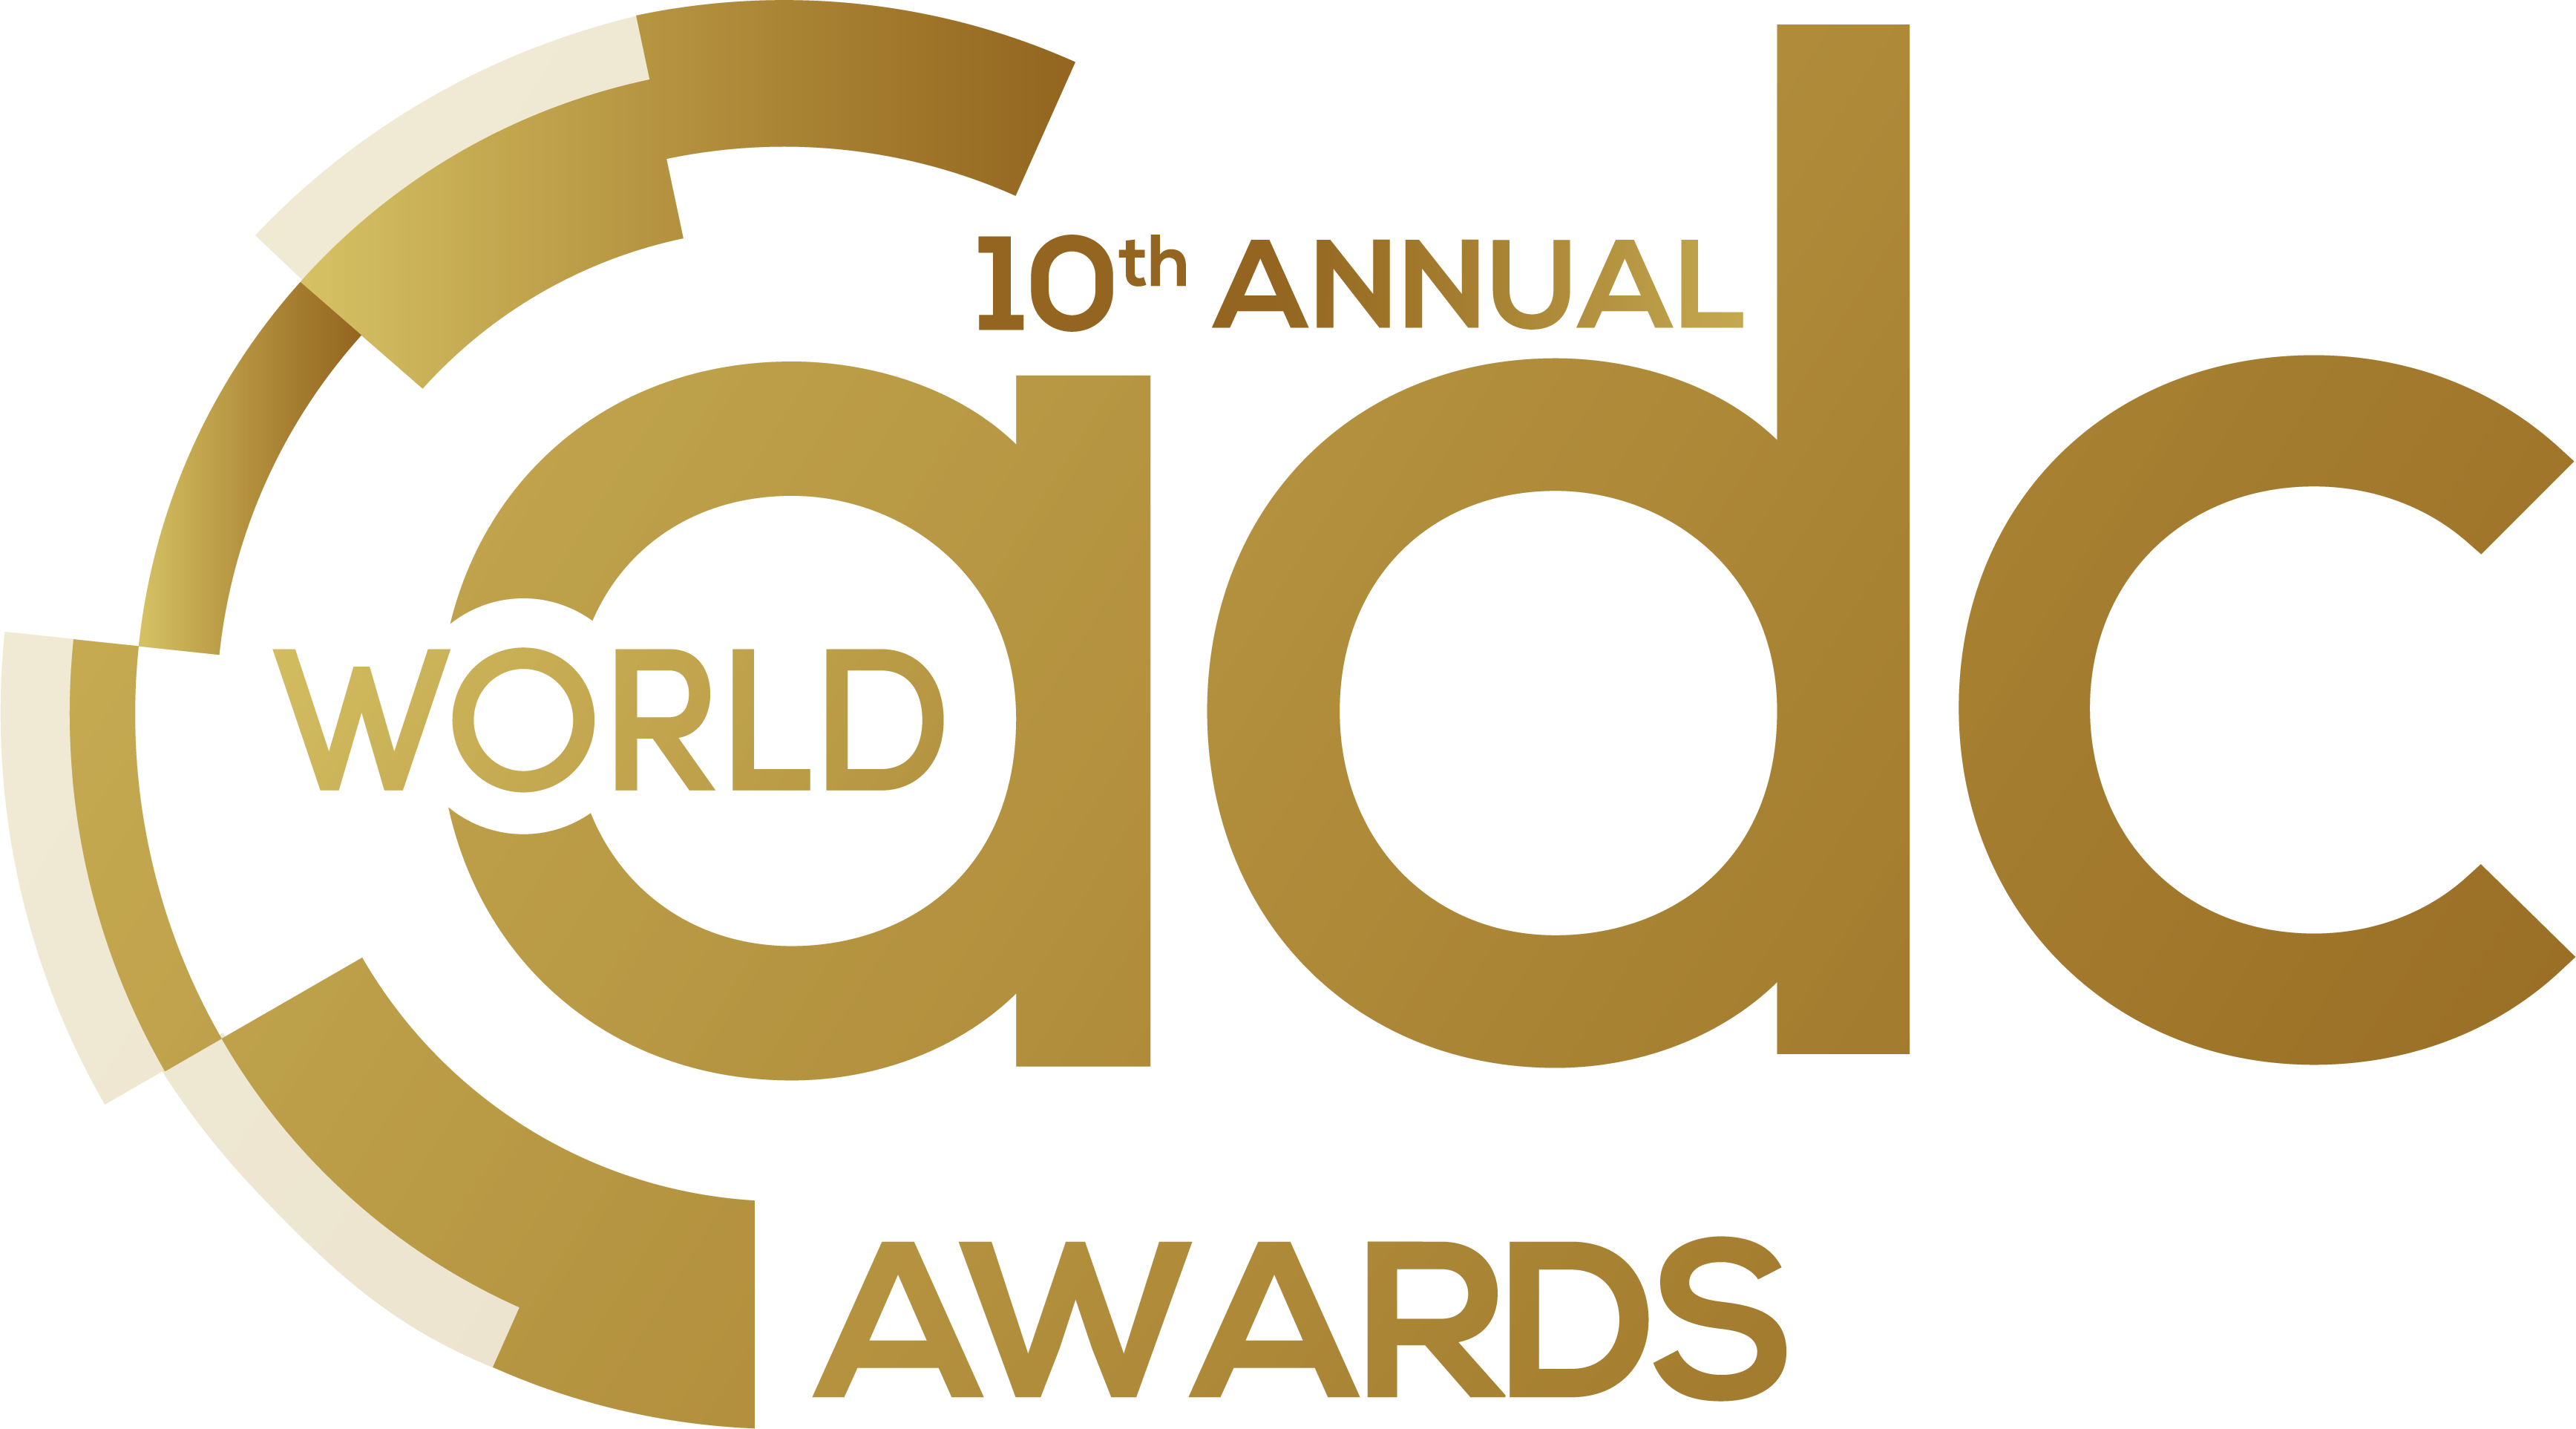 10th ADC Awards logo GOLD